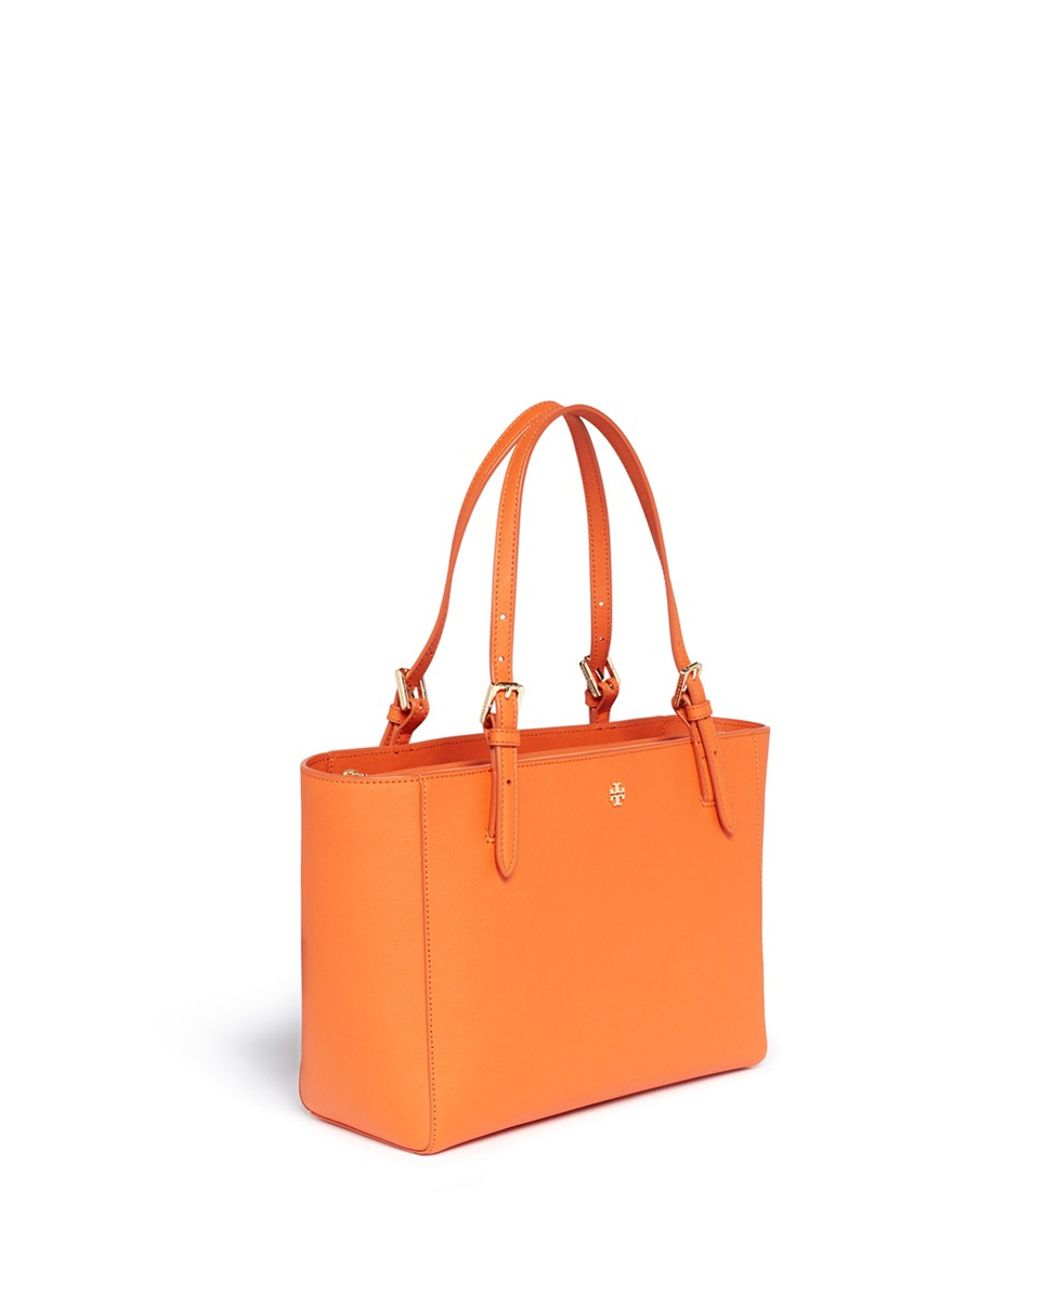 Tory Burch Orange Leather Logo Stripe Tote Bag with Strap 623tor316